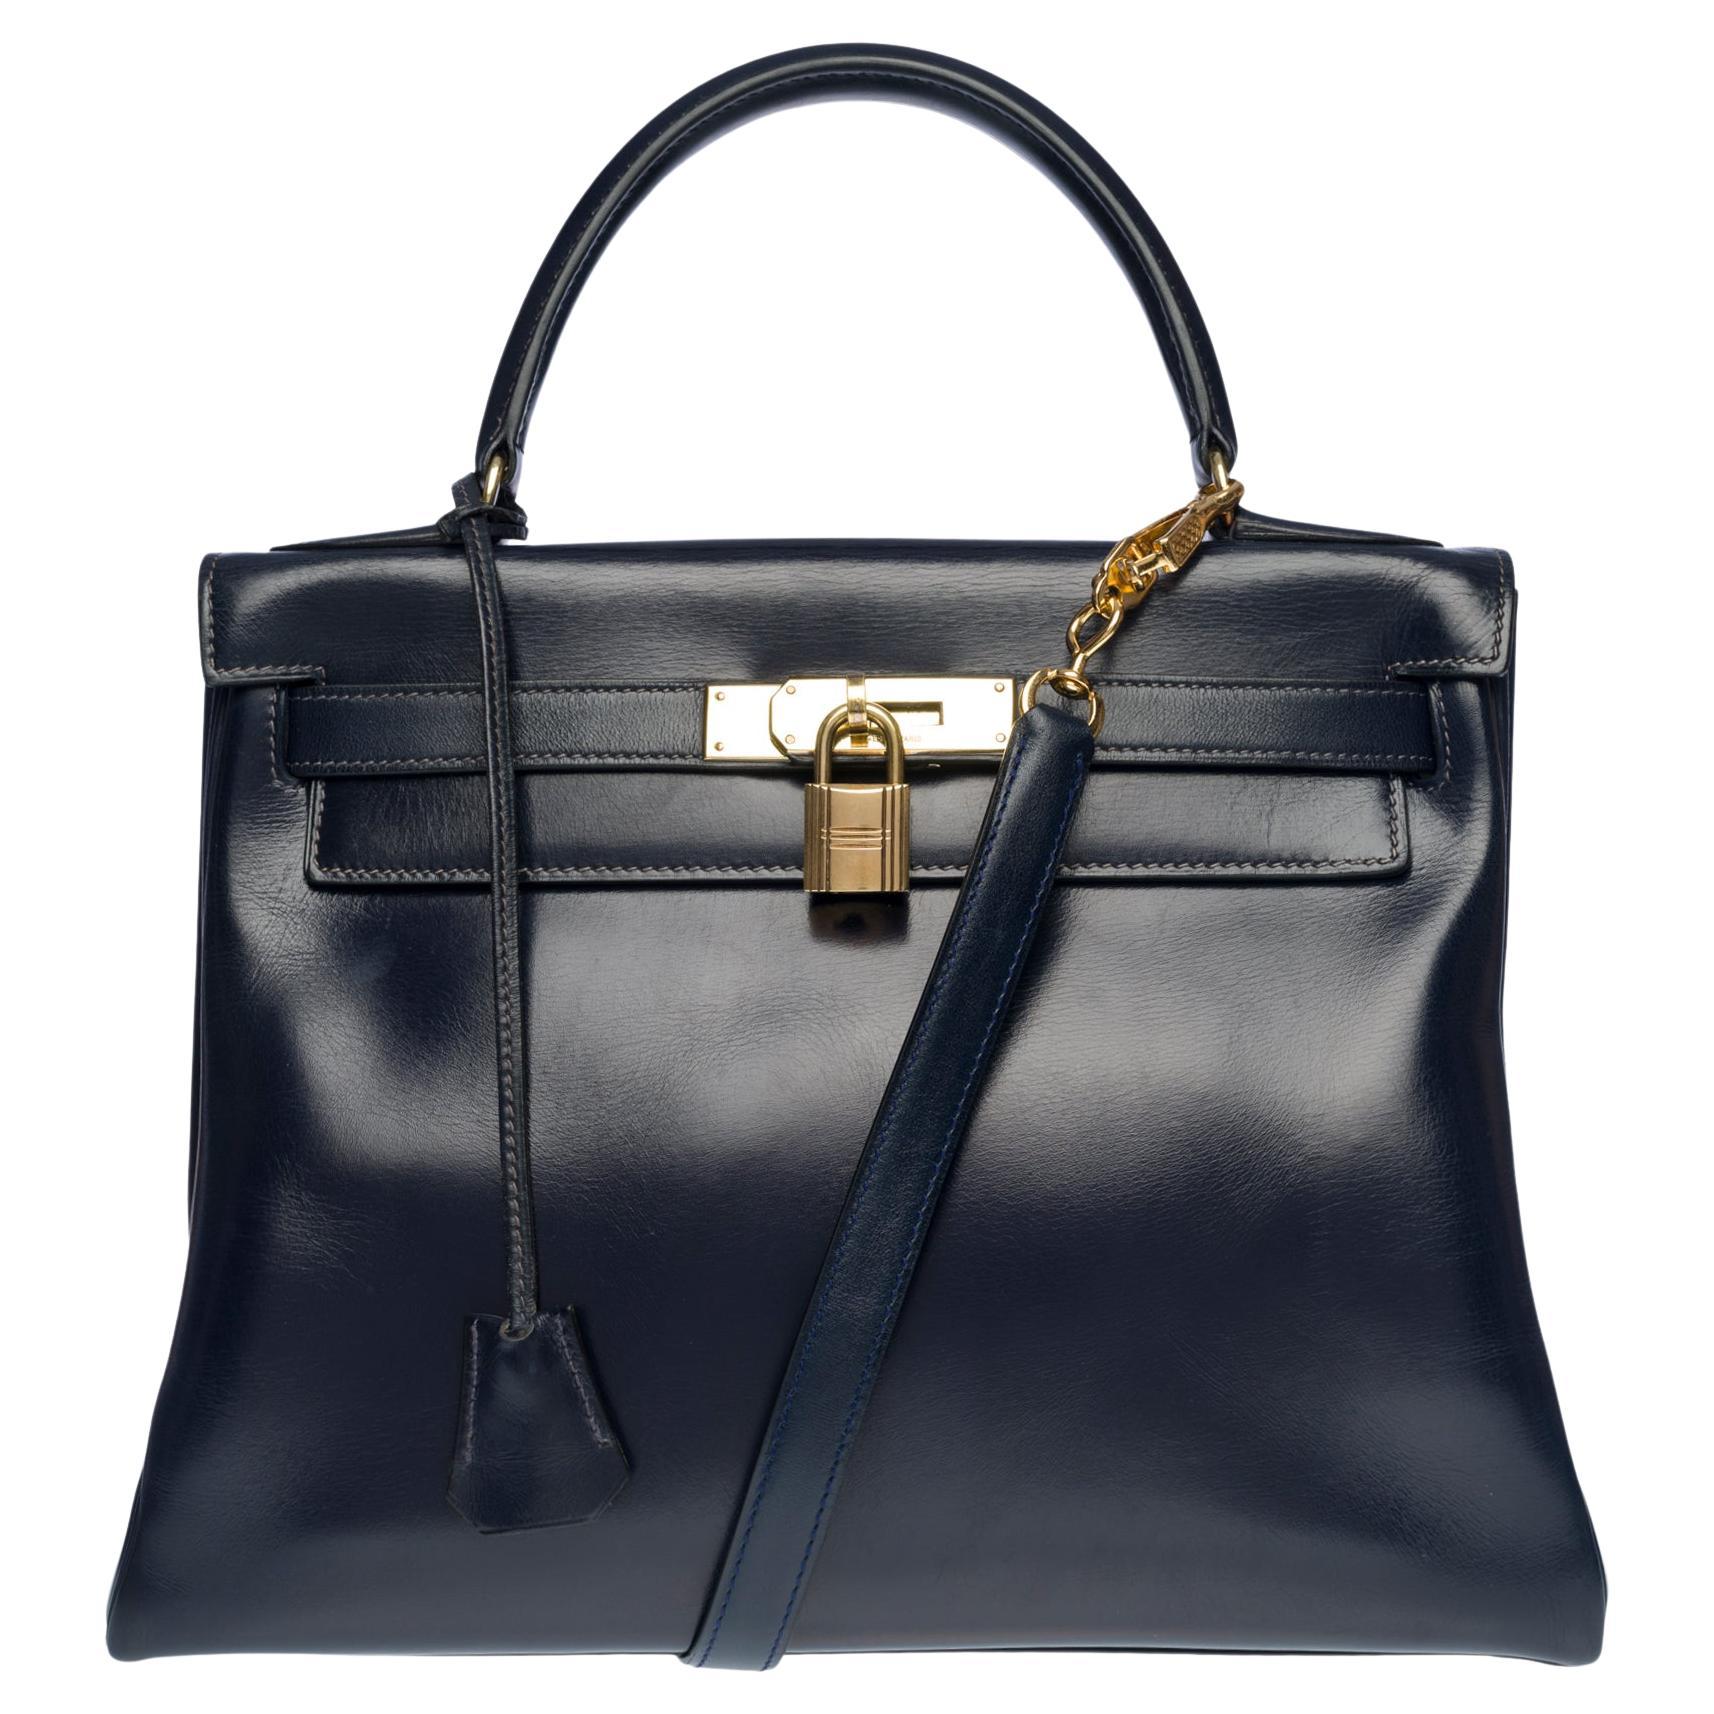 Amazing Hermes Kelly 28 retourne handbag strap in Navy blue box calfskin, GHW